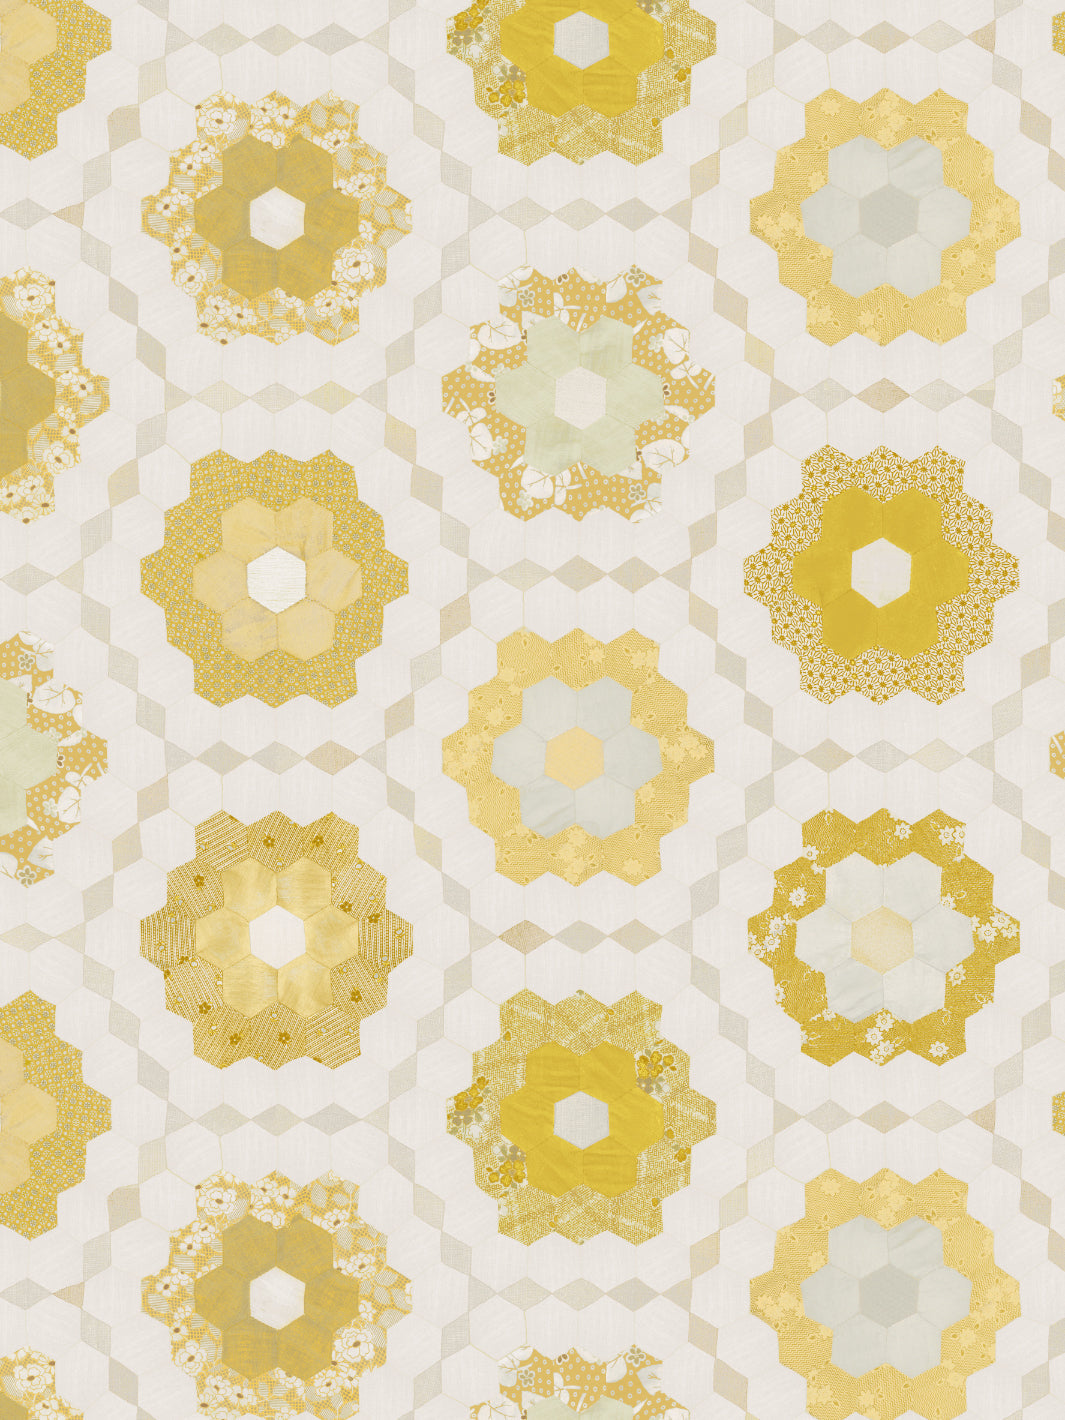 'Pinwheel Quilt' Wallpaper by Chris Benz - Yellow